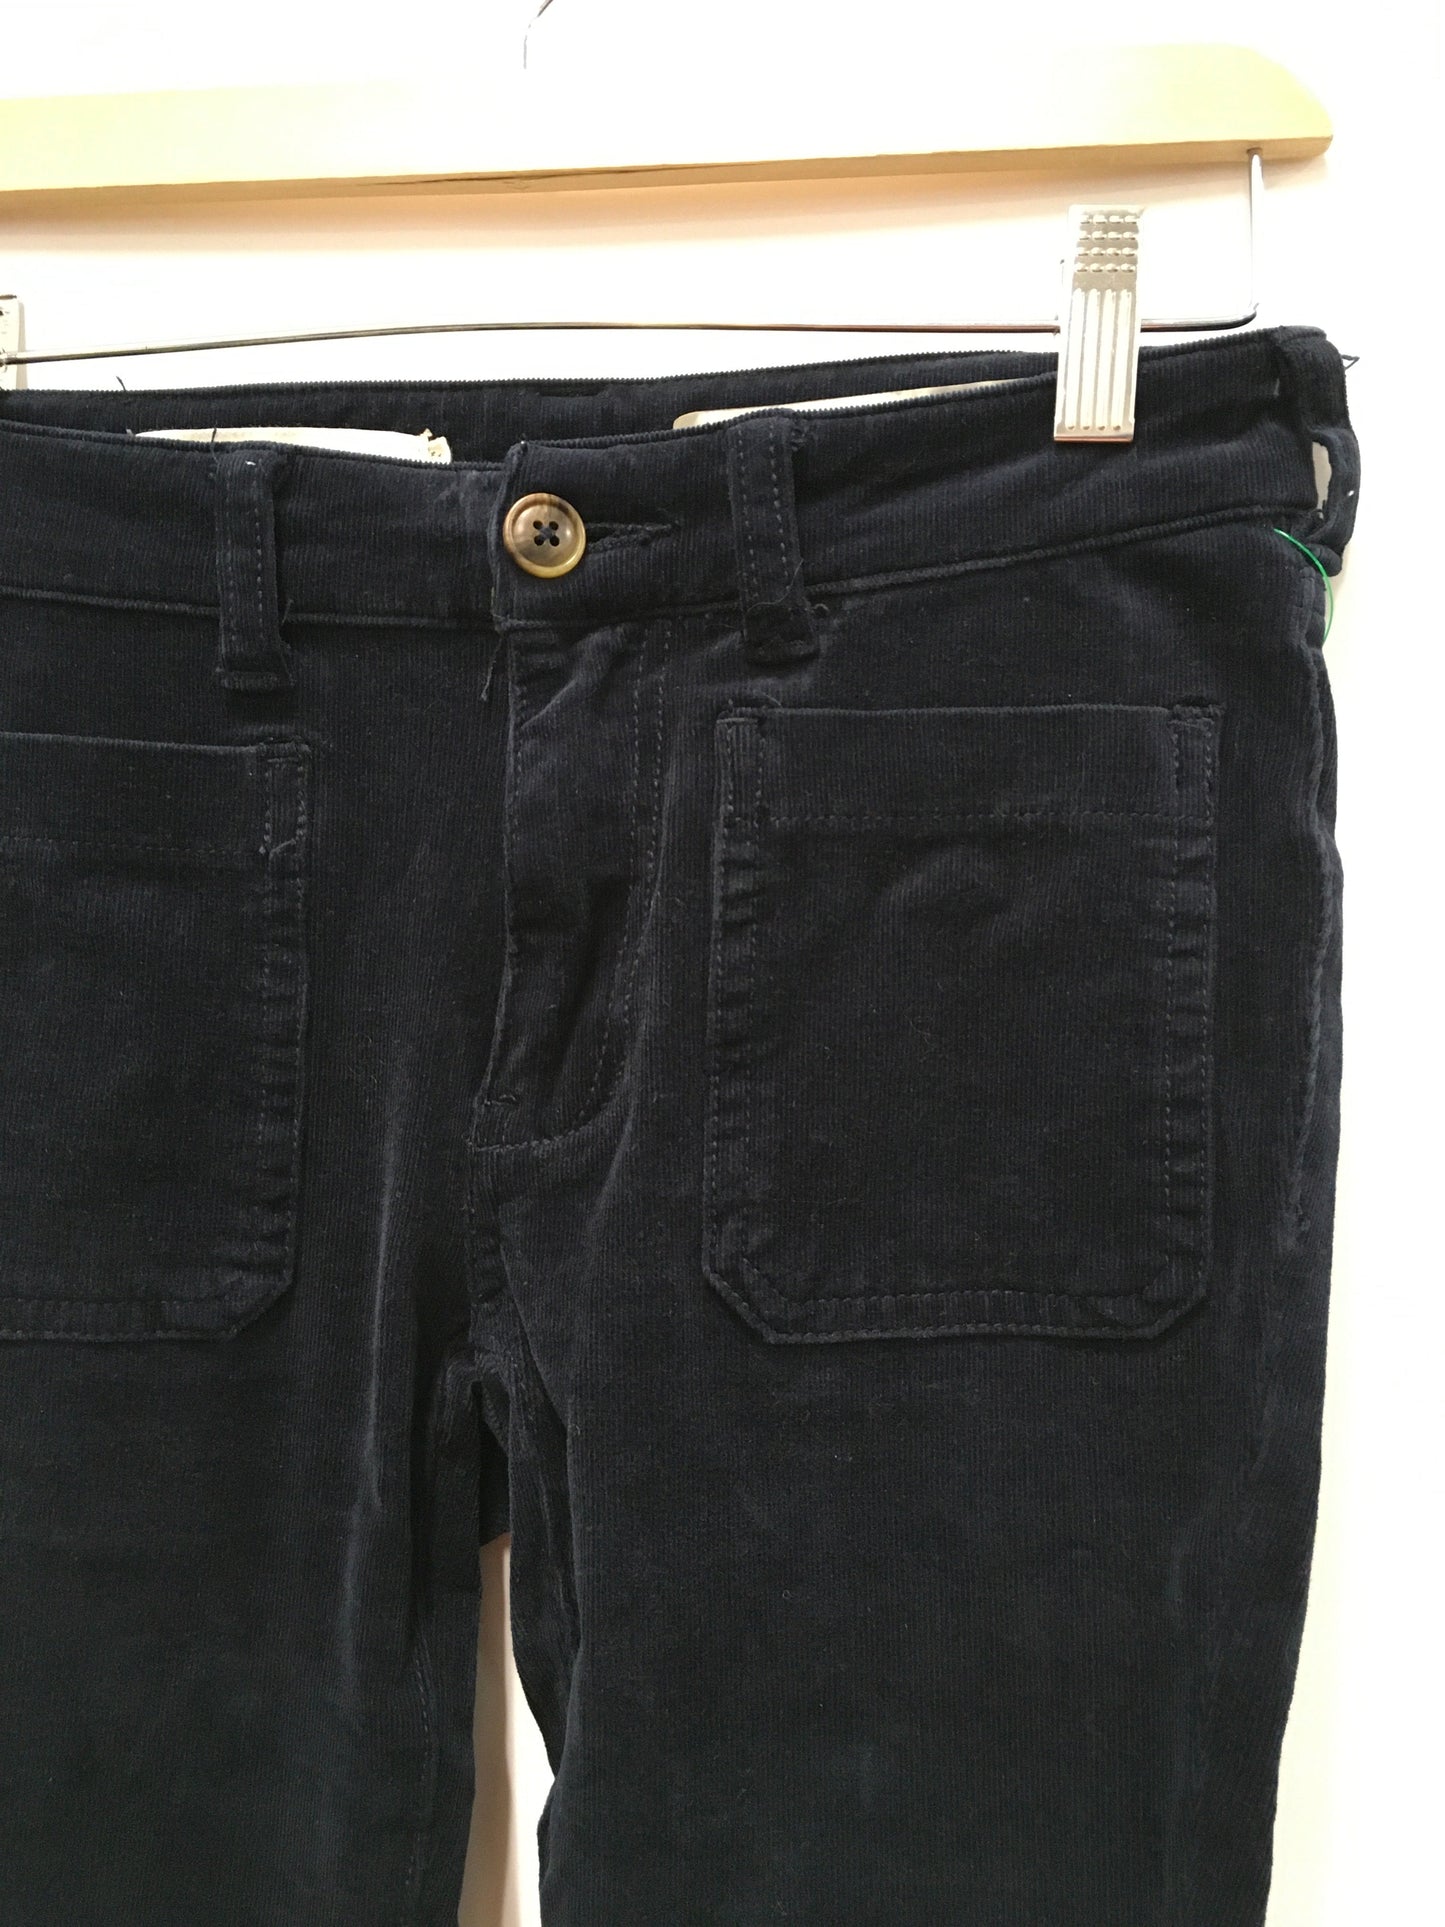 Pants Corduroy By Pilcro  Size: 2